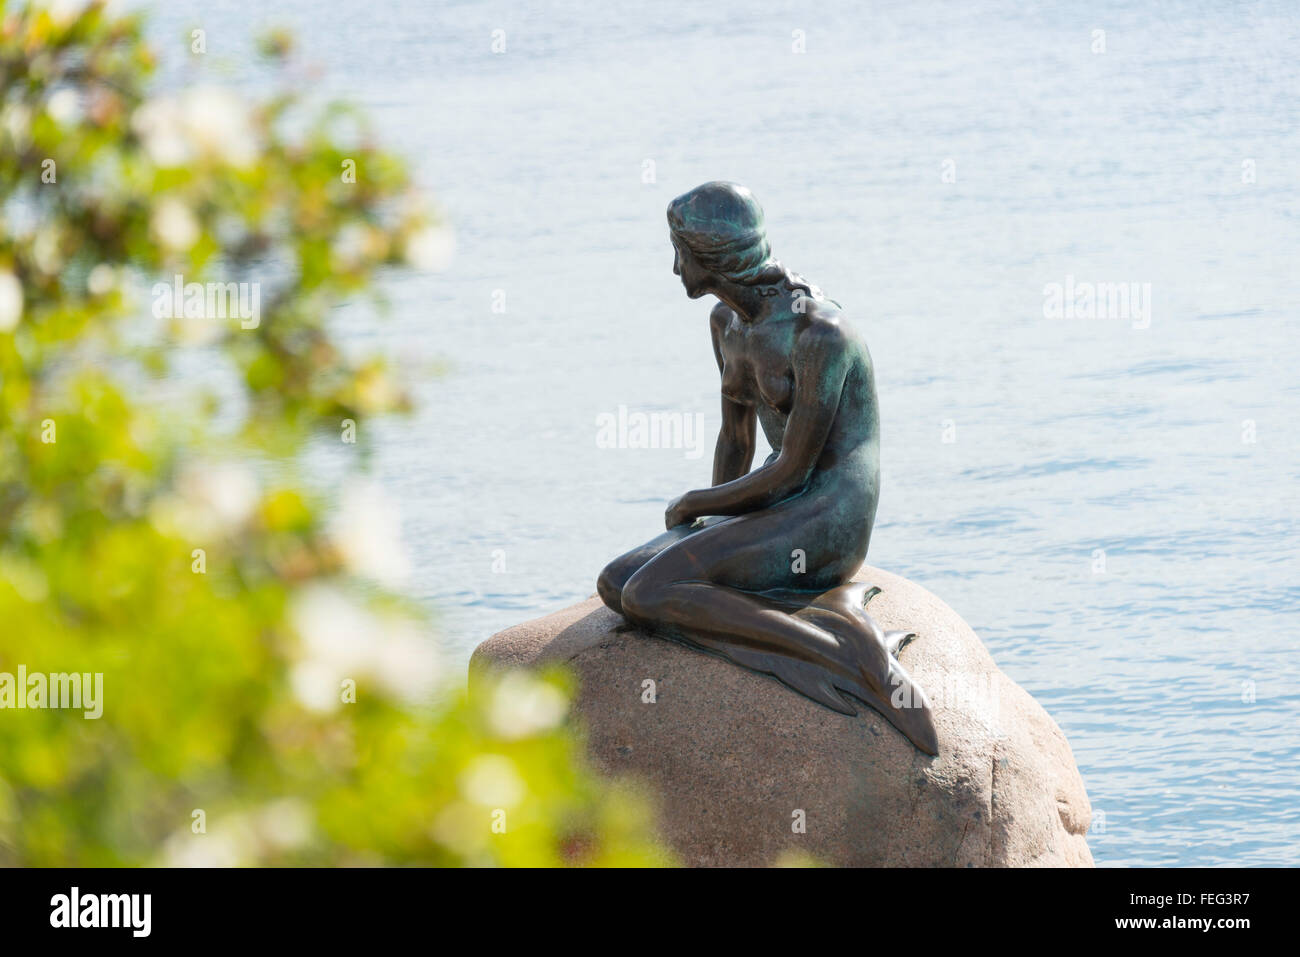 La Sirenita (Den Lille Havfrue) estatua, Langelinie, Copenhague (Kobenhavn), Reino de Dinamarca Foto de stock